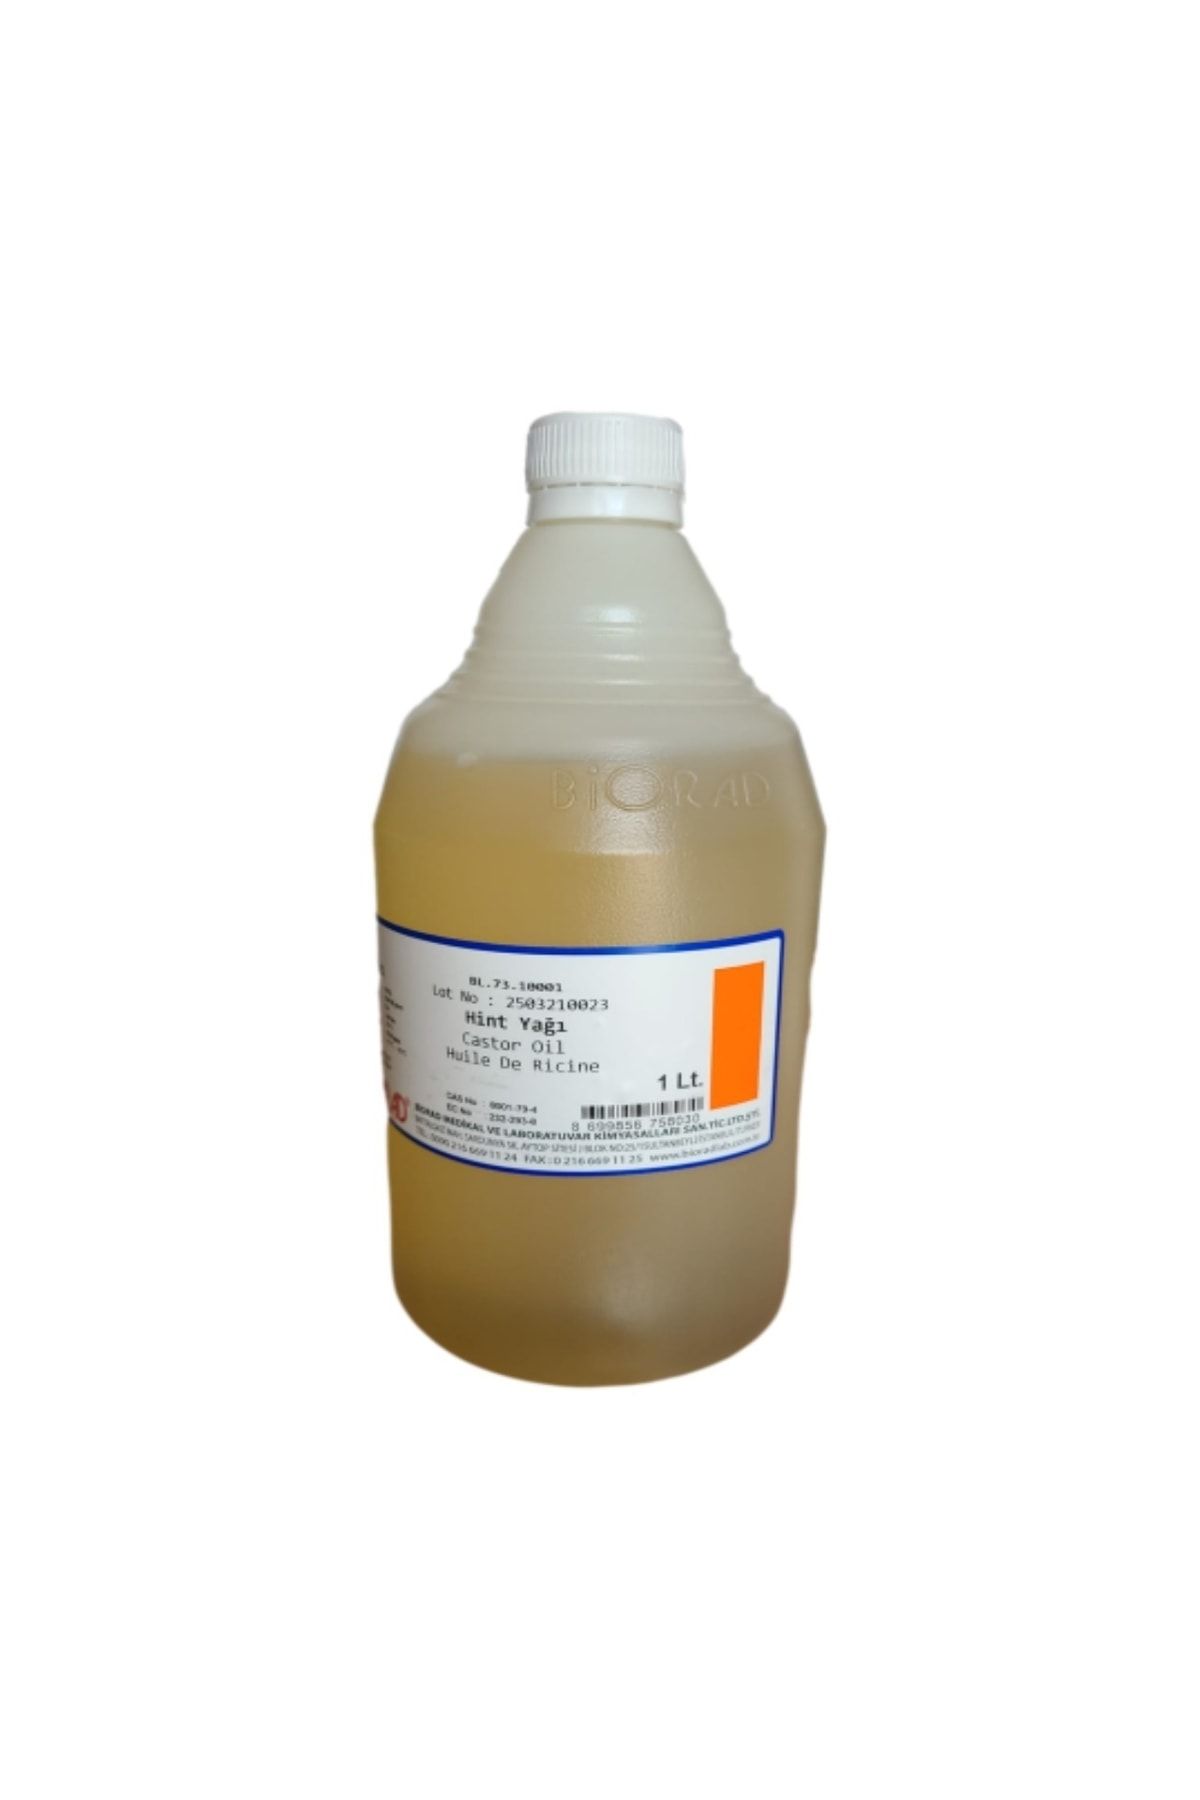 BİORAD Hint Yağı 1000 ml Castor Oil - Huile De Ricine